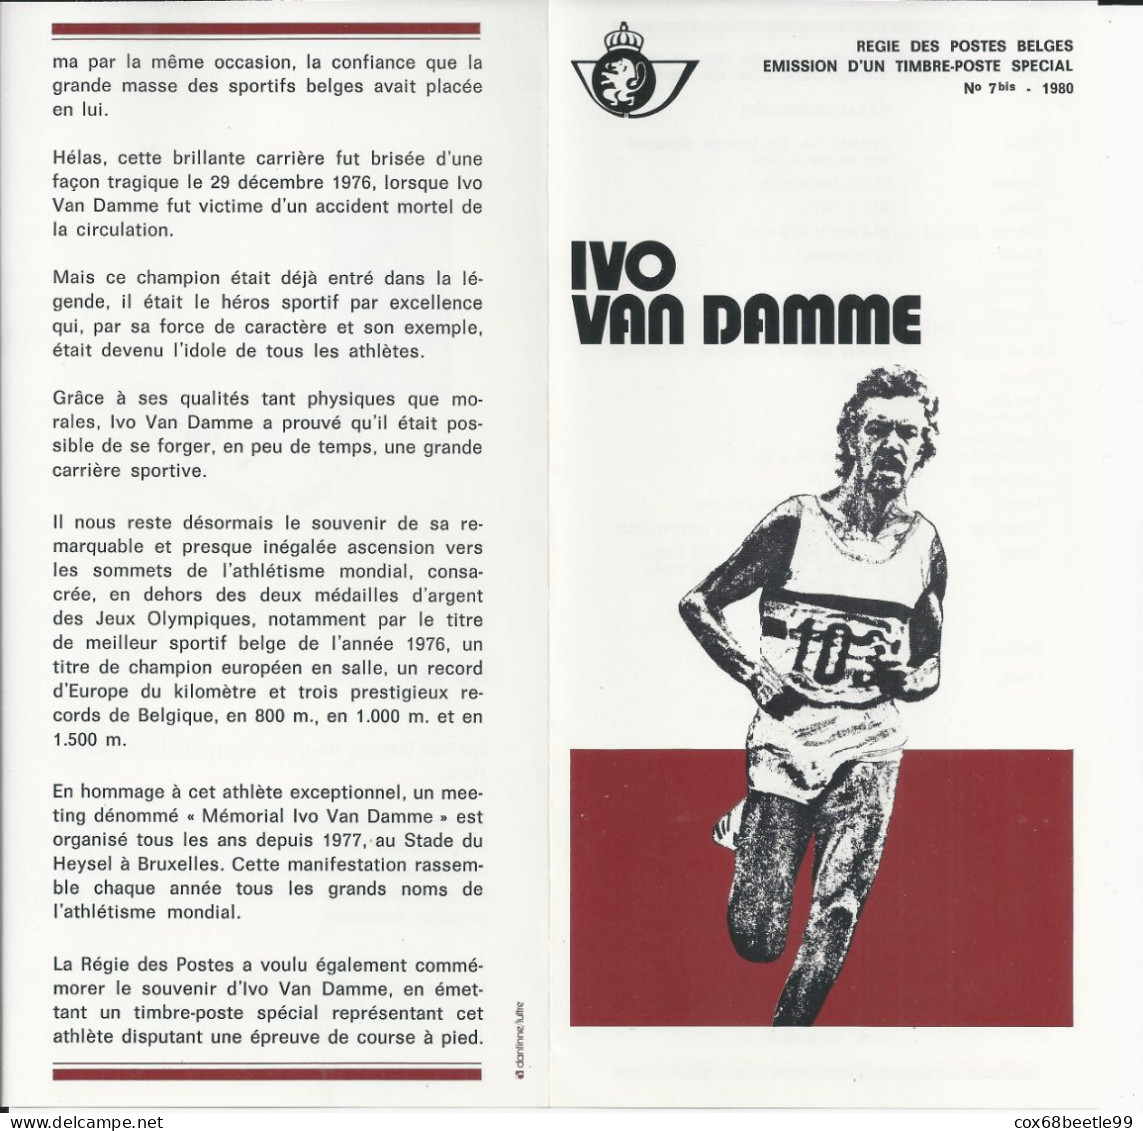 IVO VAN DAMME Belgique Feuillet De La Poste 1980 - 7 Bis FDC Cob 1974 03-05-1980 LIEGE Club Philatélique Le Perron - Postkantoorfolders